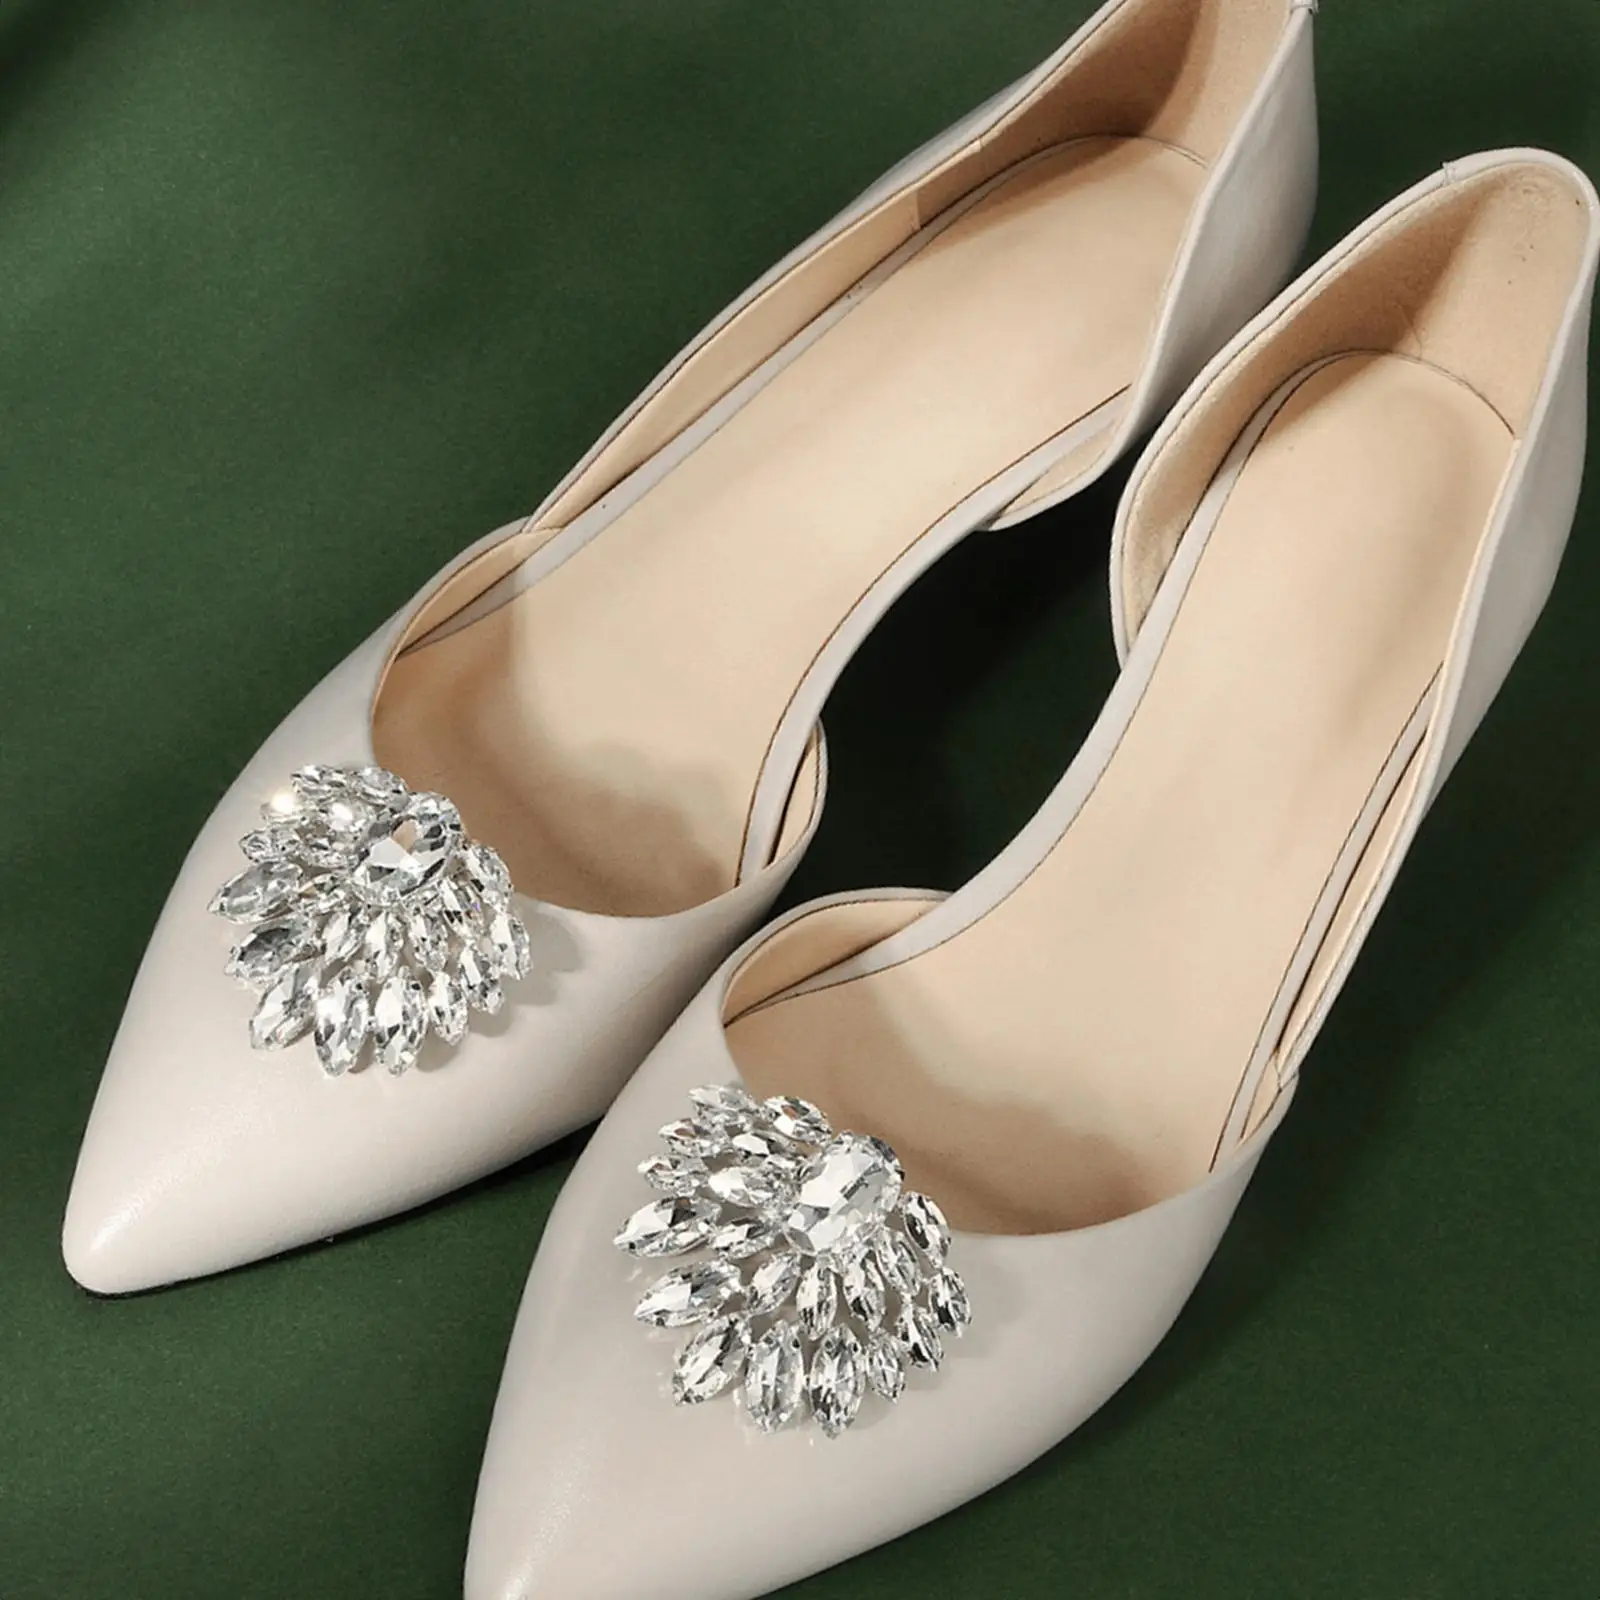 2x Decorative Shoes Clips Bridal Shoes Charm Floral Detachable Craft Garment Accessories Jewelry for Banquet Party Decoration